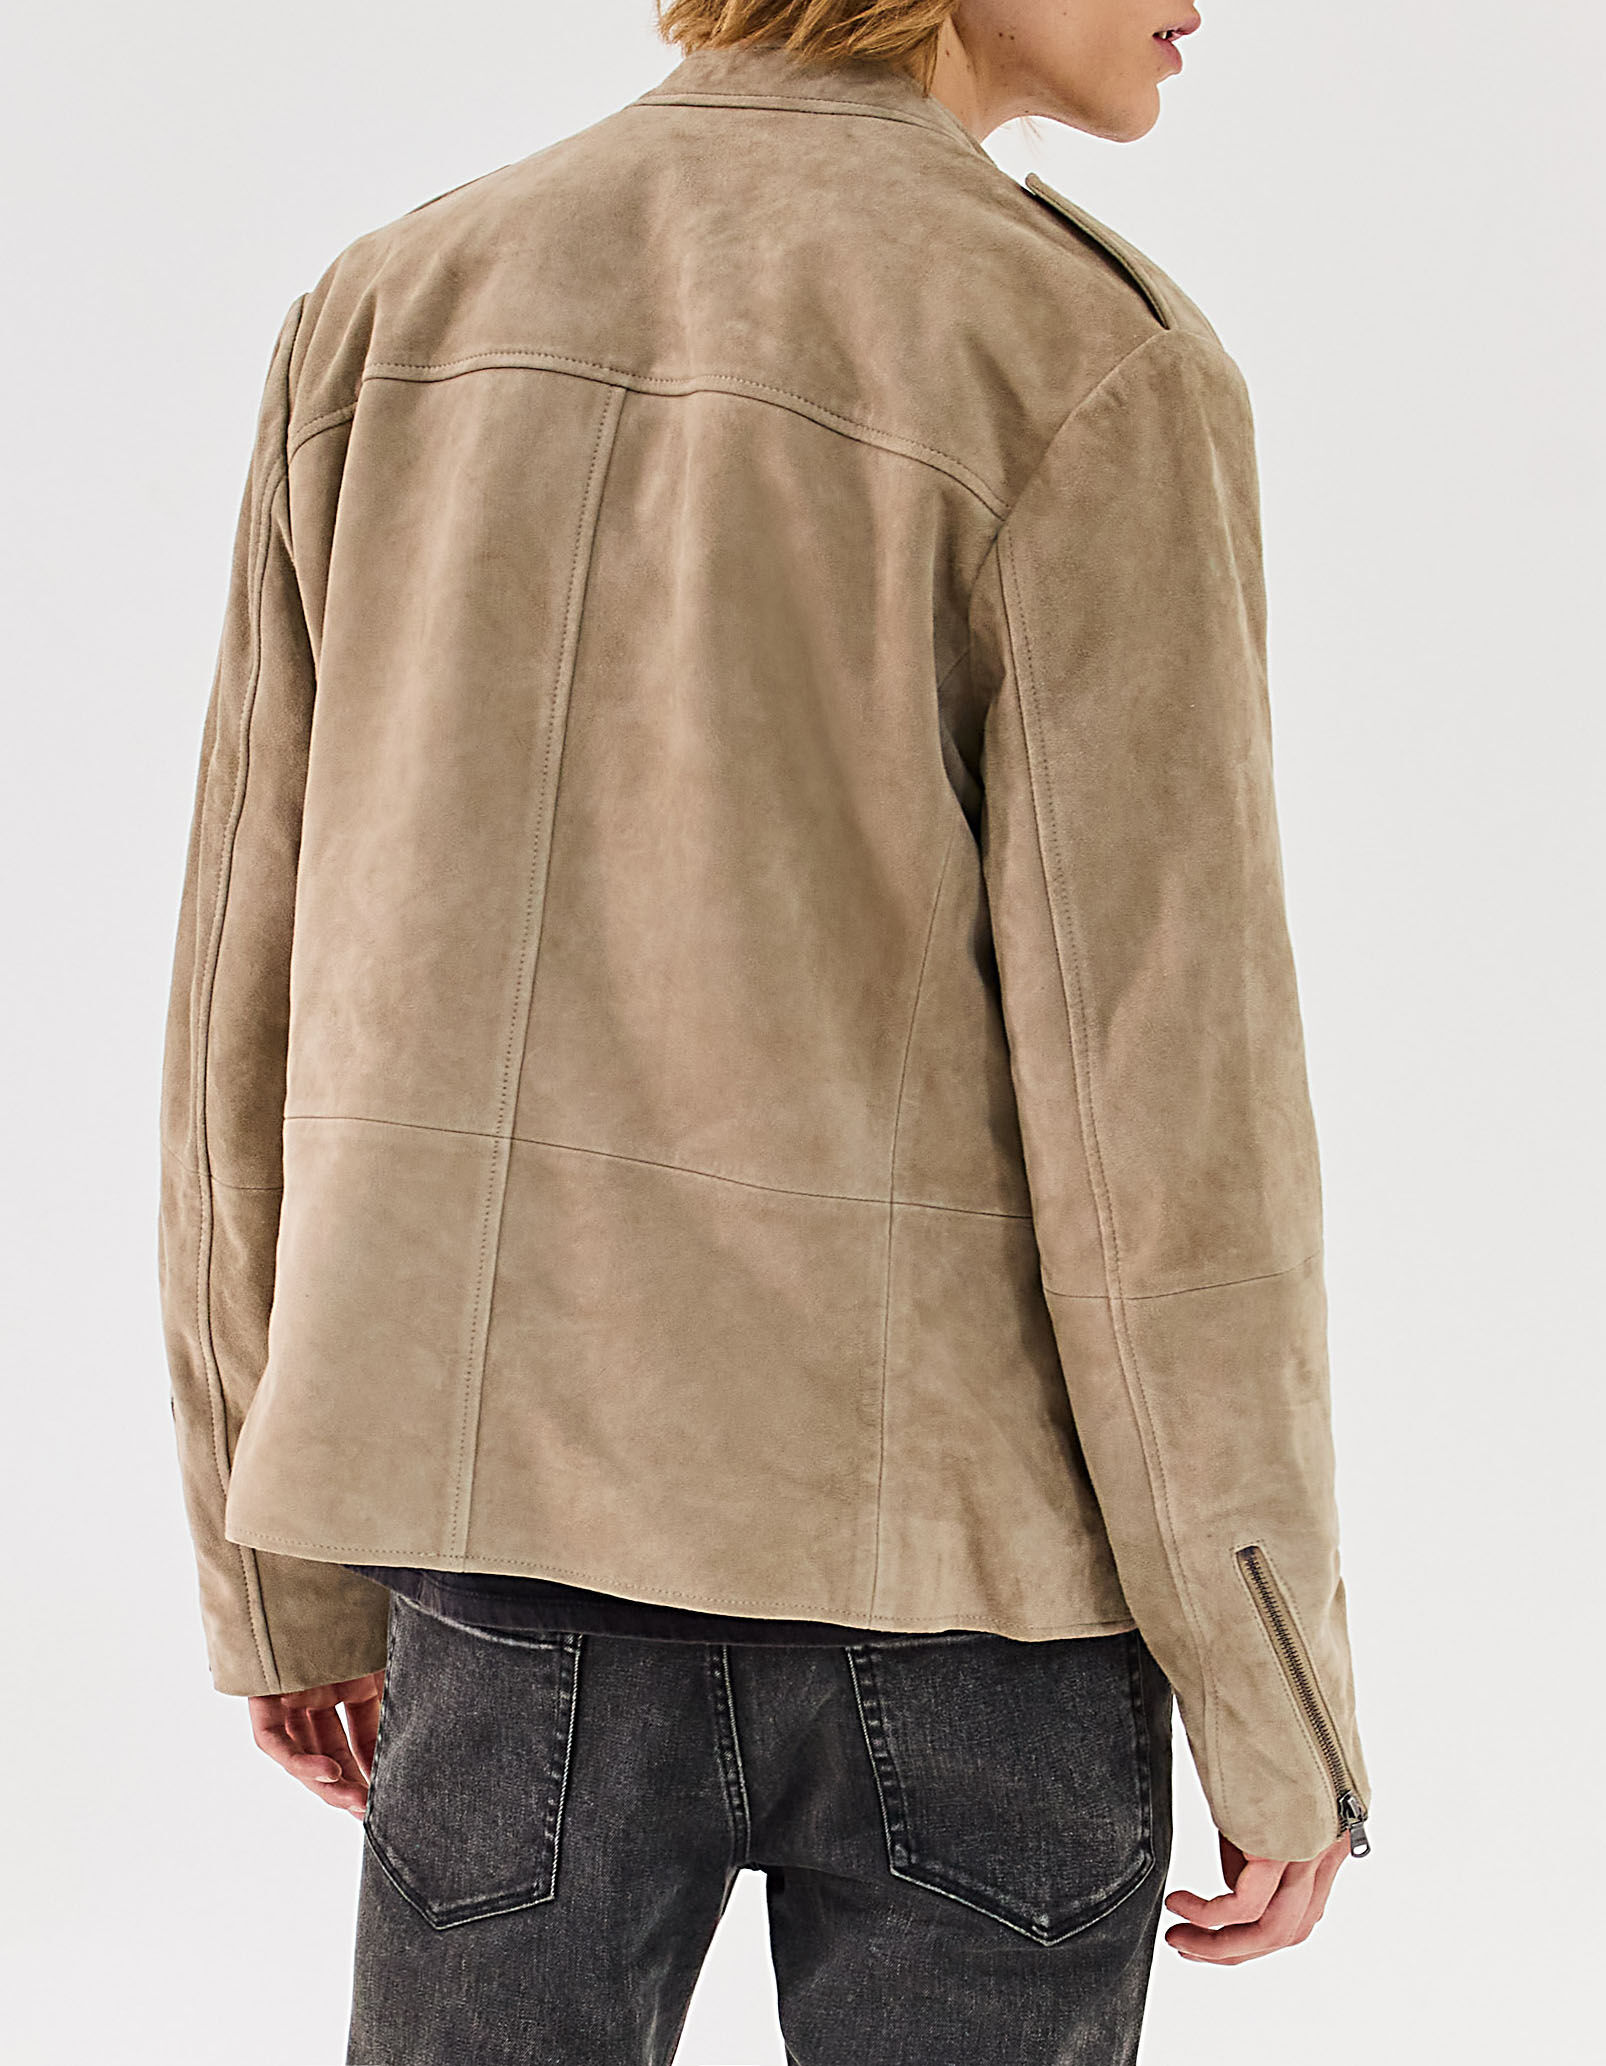 Men's light beige suede biker-style jacket